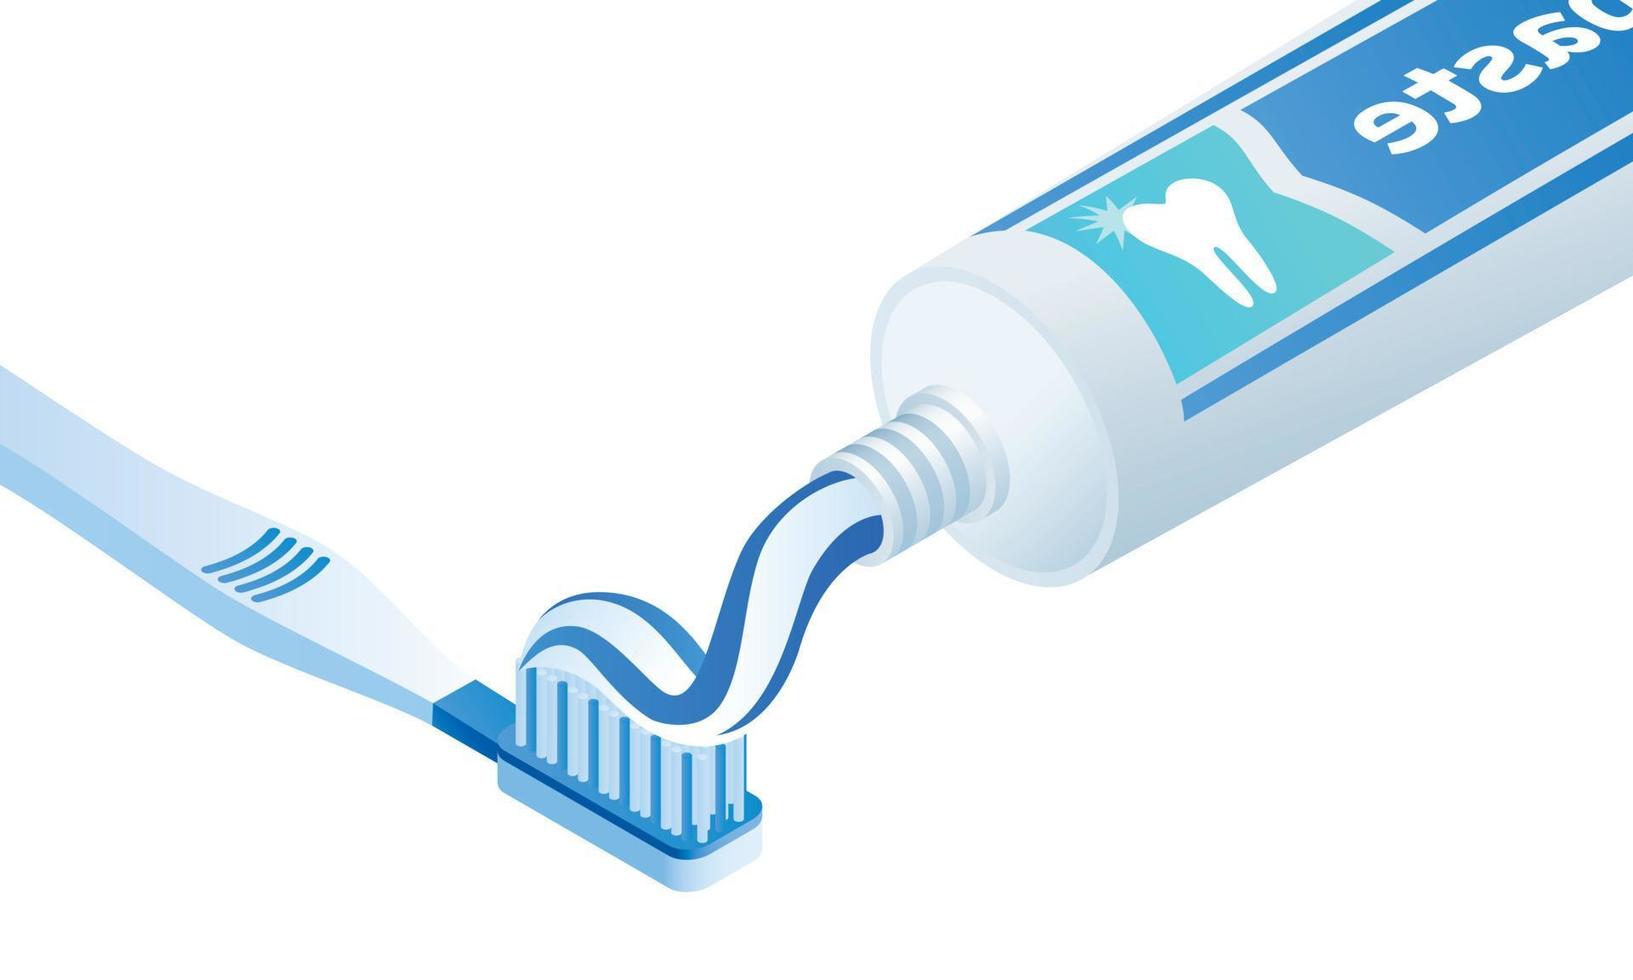 banner de conceito de pasta de dente, estilo isométrico vetor